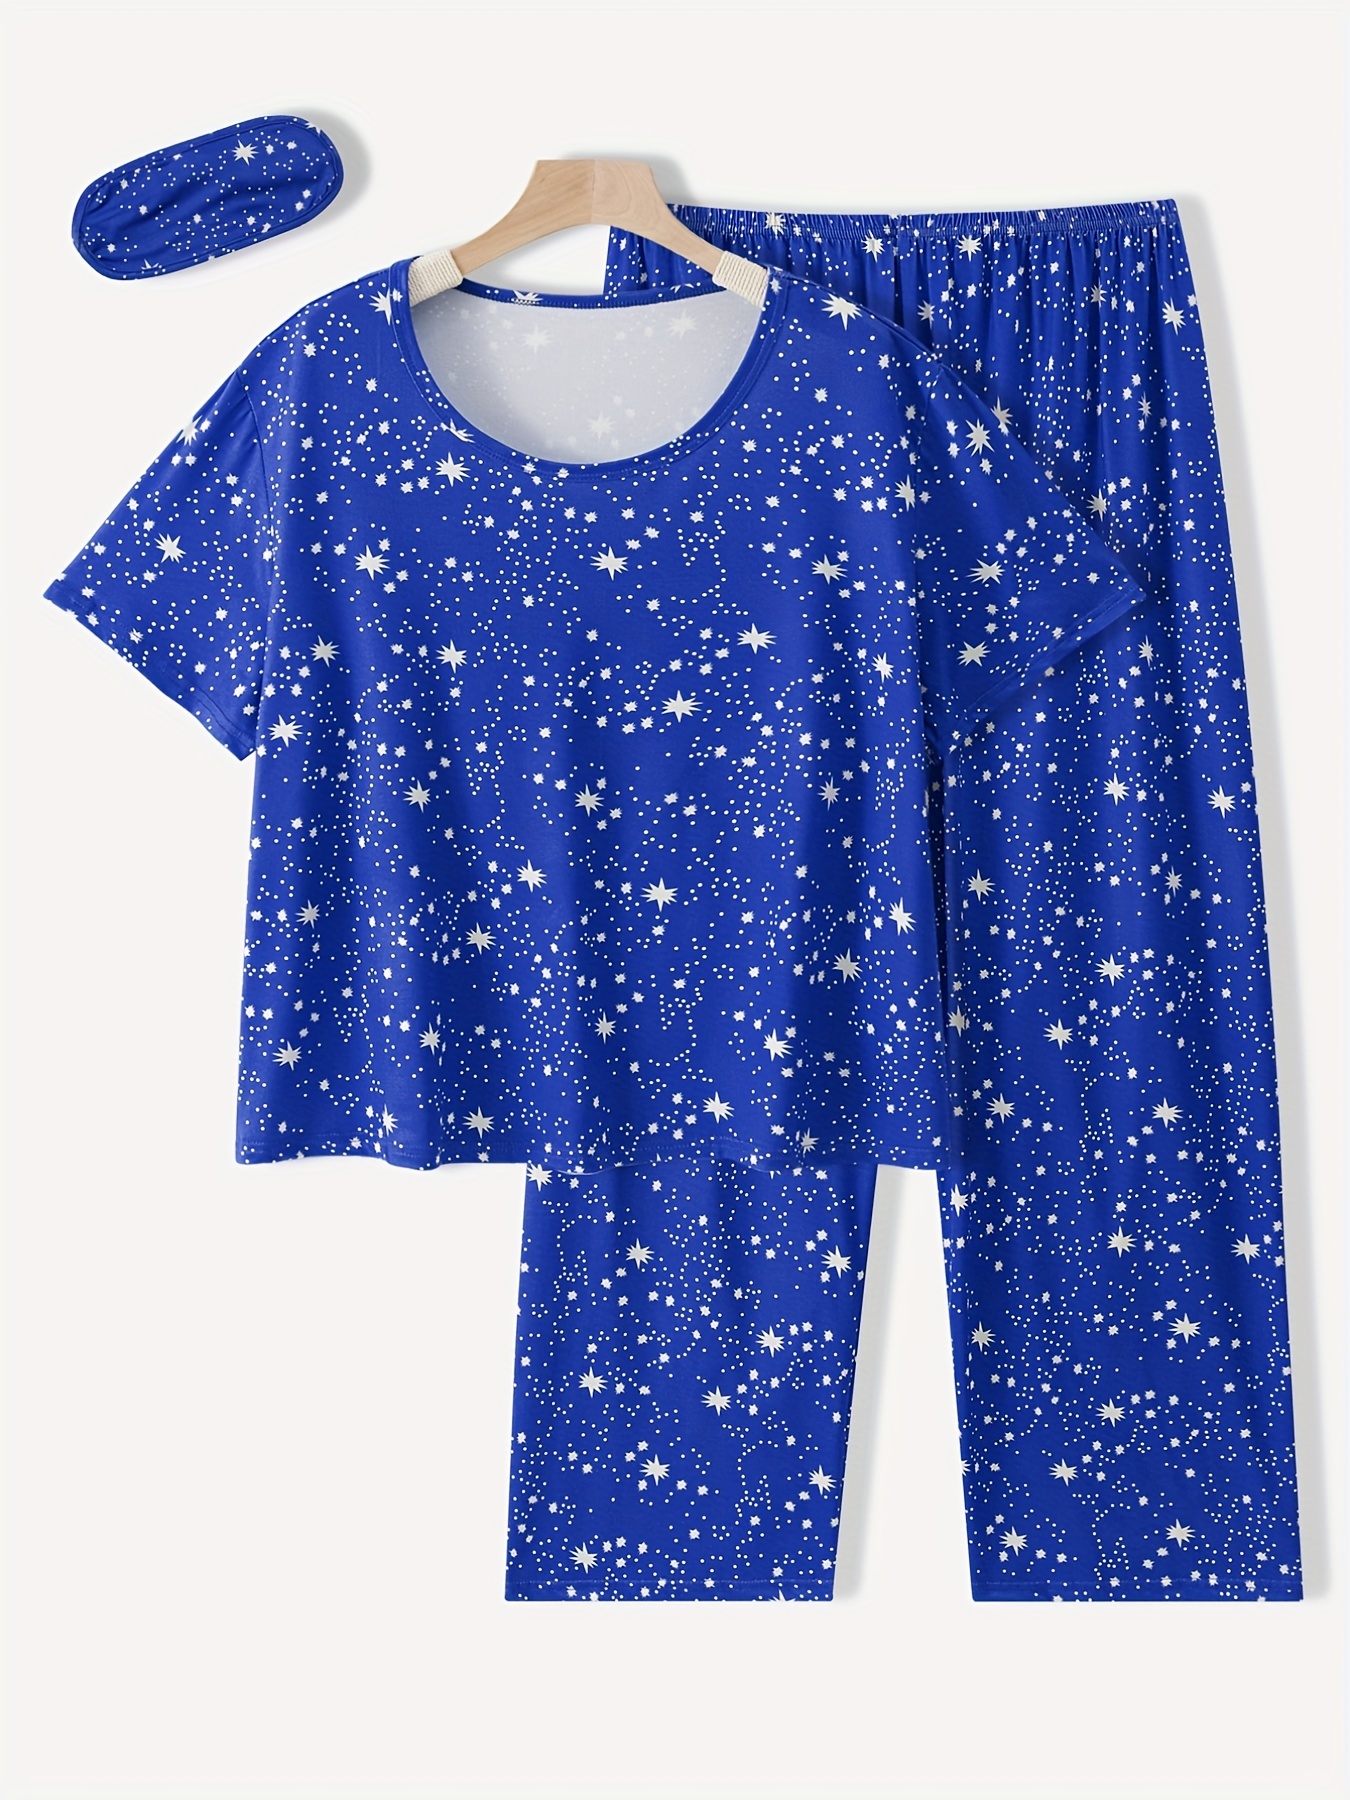 Women's Plus Size Pajama Sets Soft Short Sleeve Loungewear Sleepwear Top  With Eyemask for Ladies 5XL